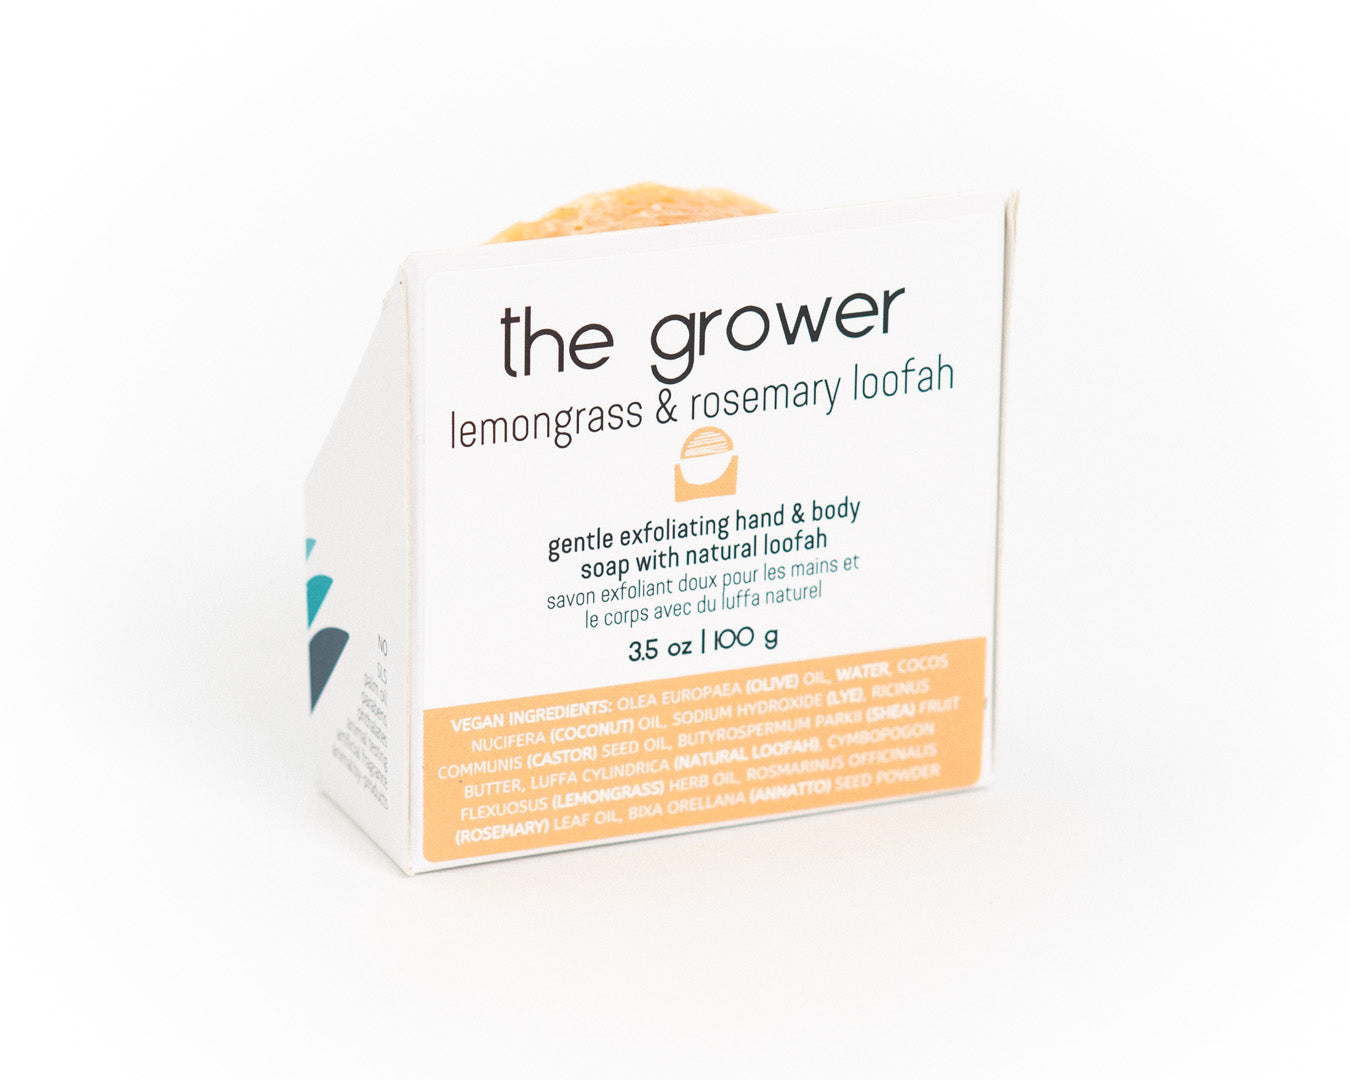 The Grower | Lemongrass & Rosemary Loofah Soap